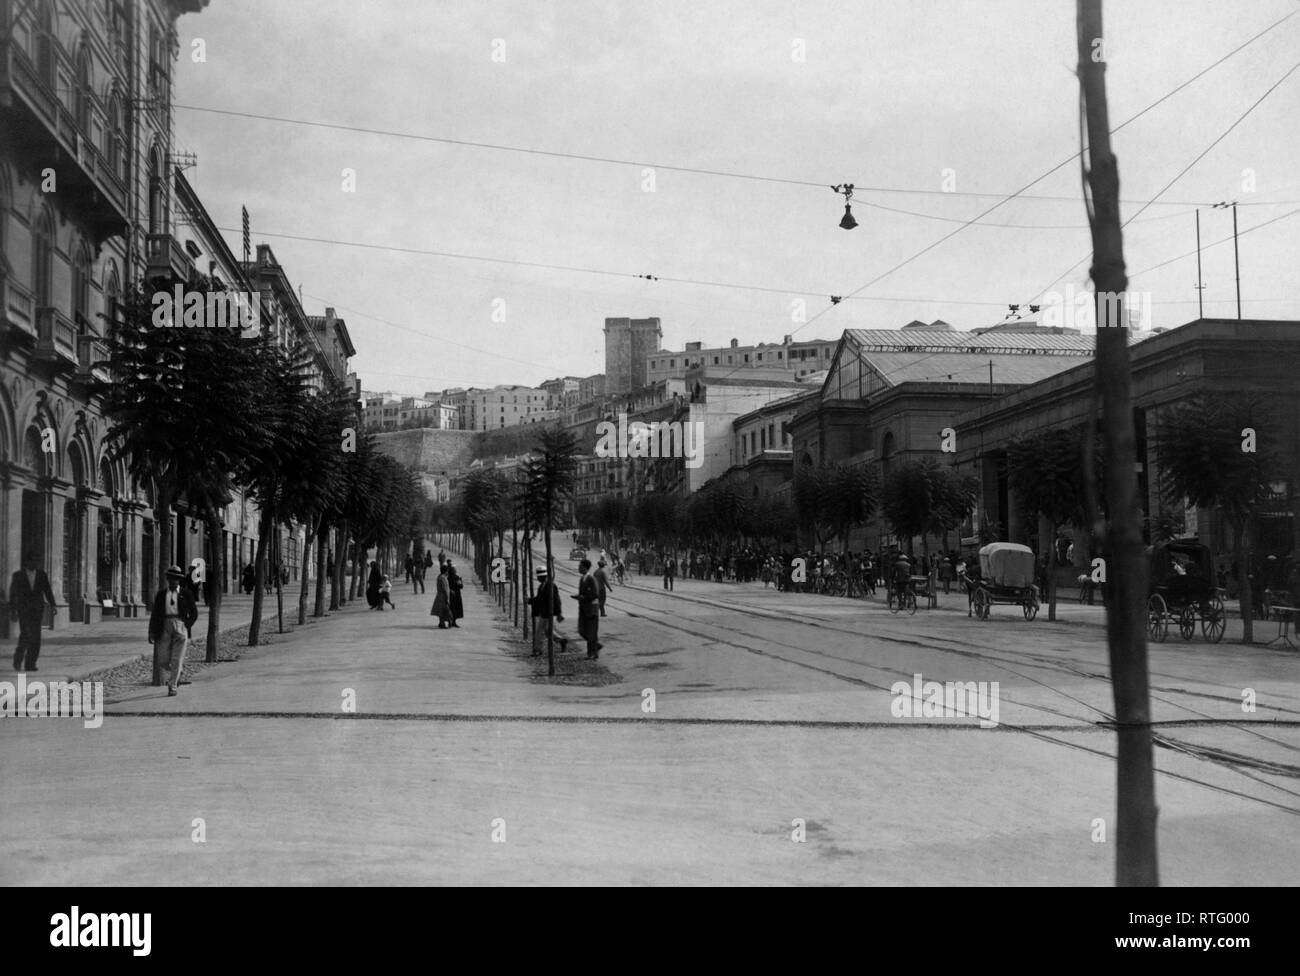 Sardinia, Cagliari, largo carlo felice, 1910-20 Stock Photo